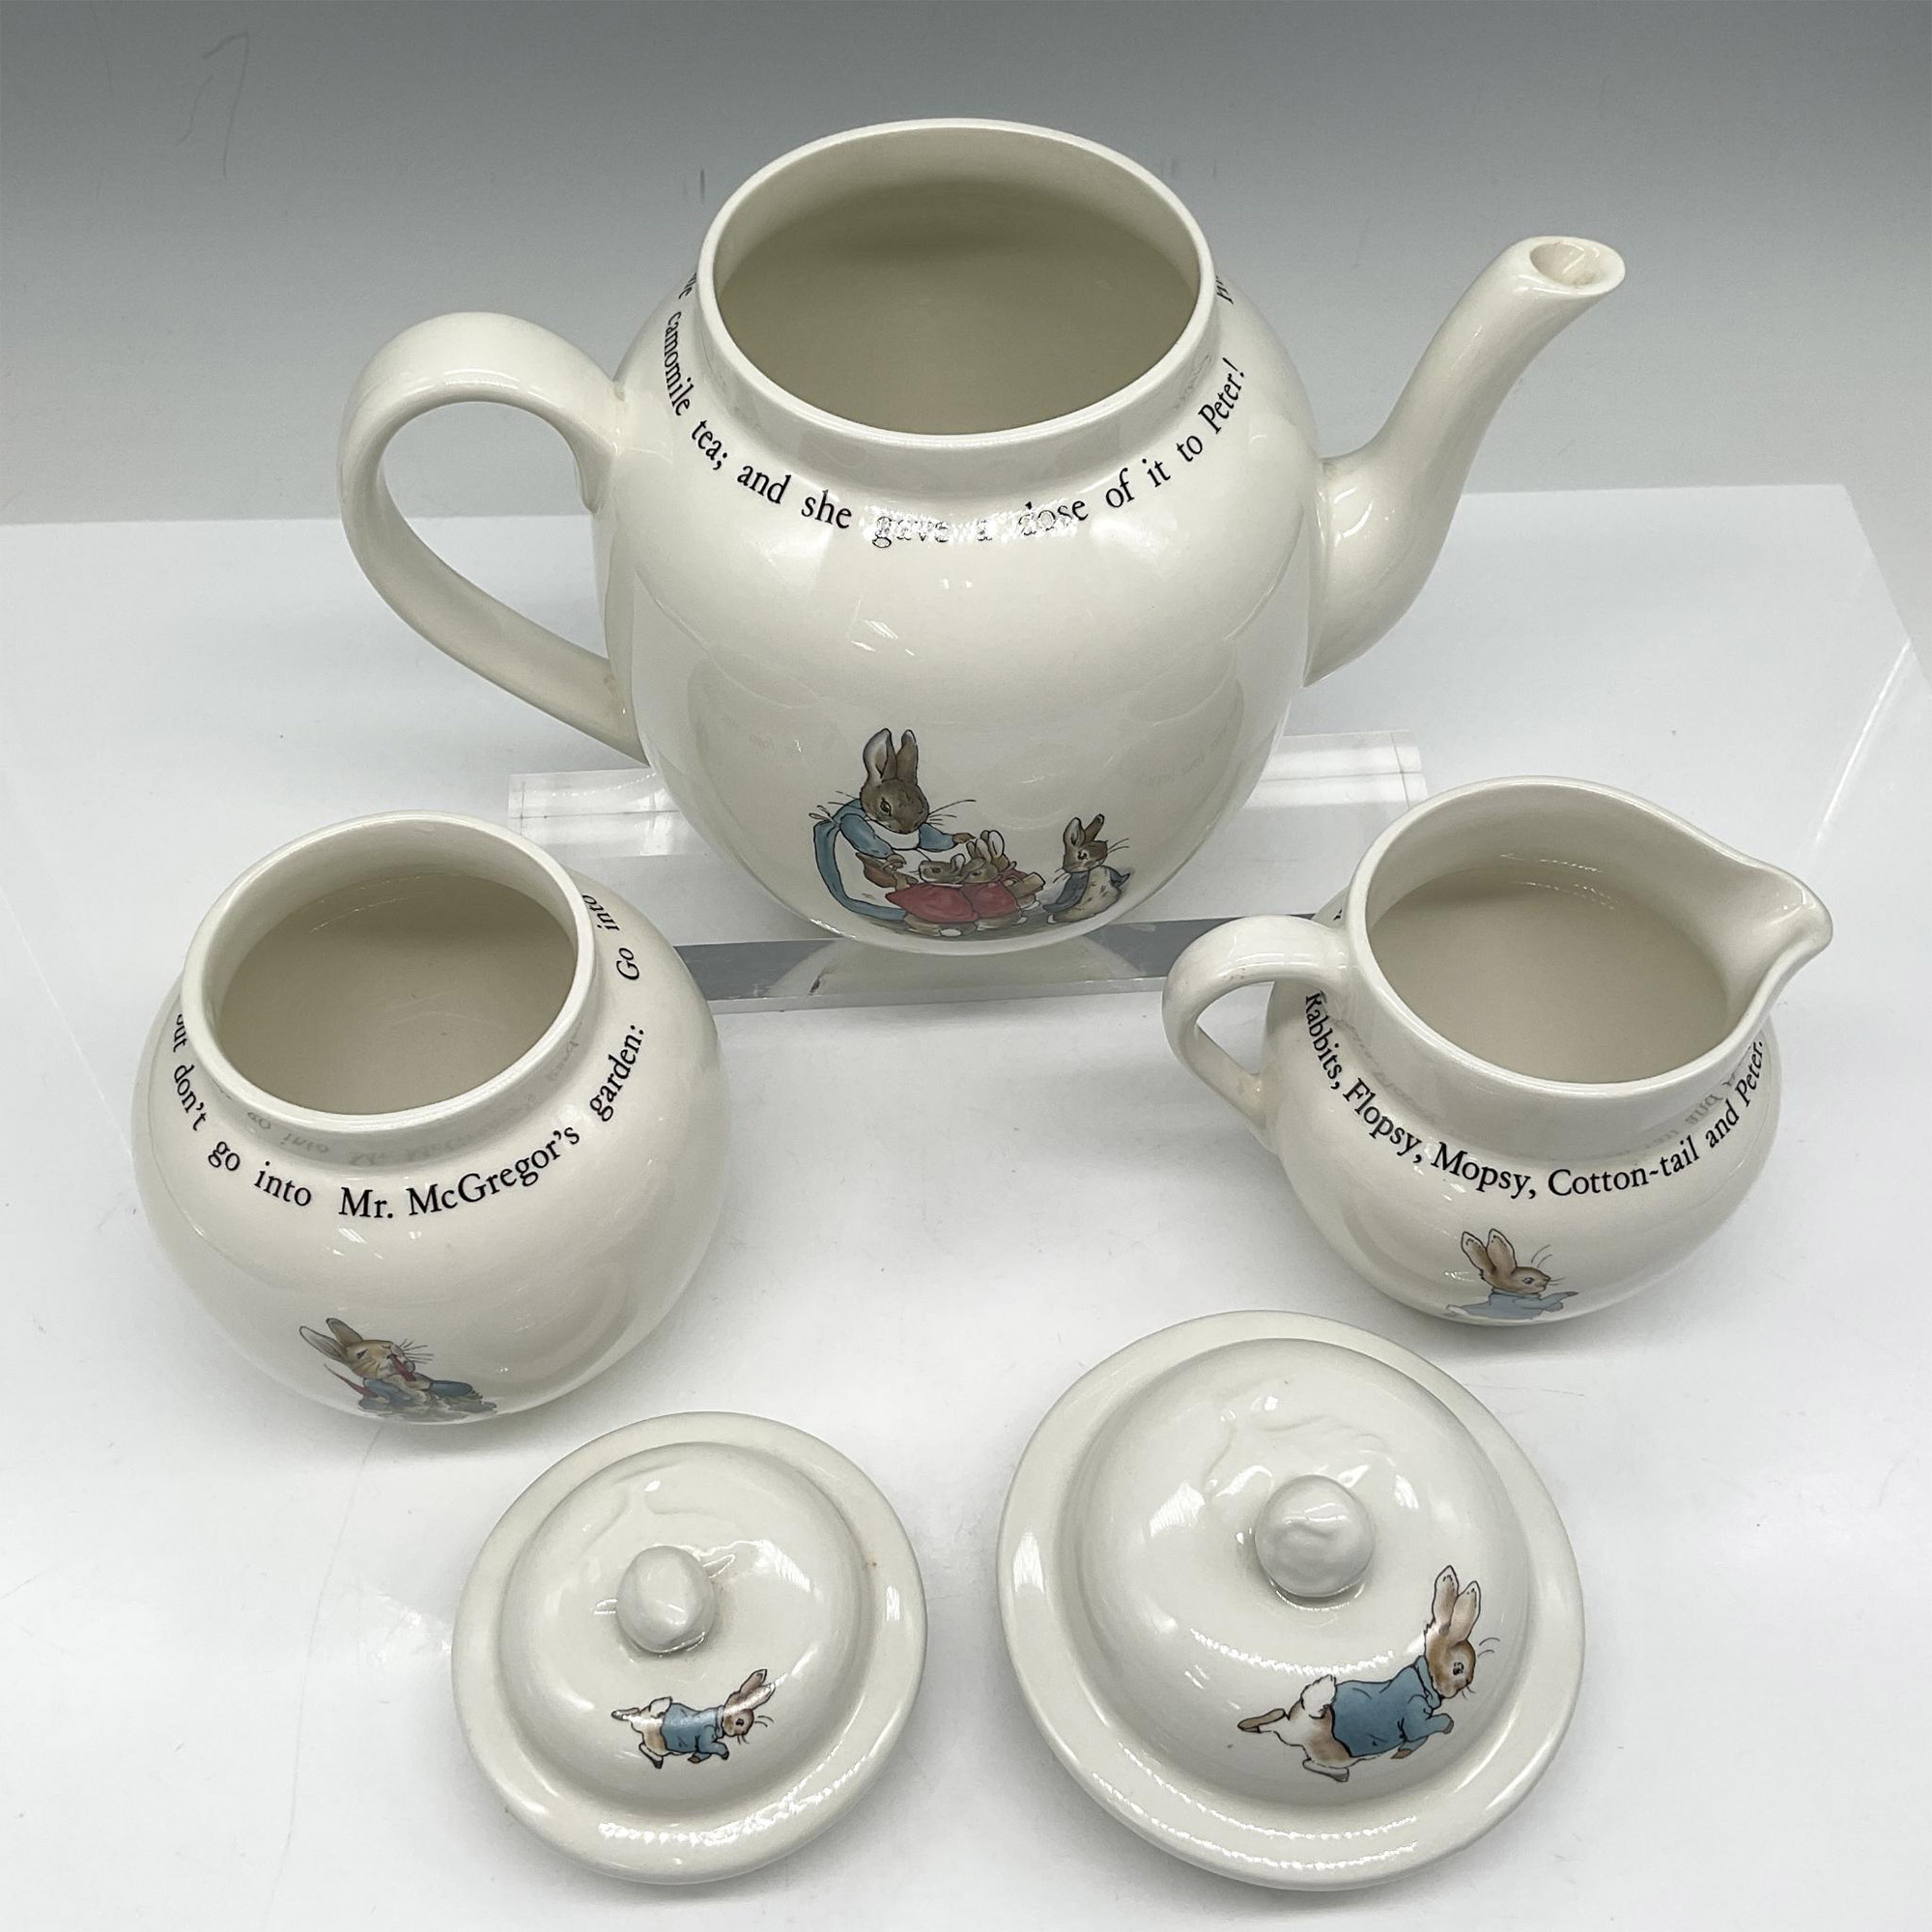 5pc Wedgwood Porcelain Beatrix Potter Peter Rabbit Tea Set - Image 3 of 4